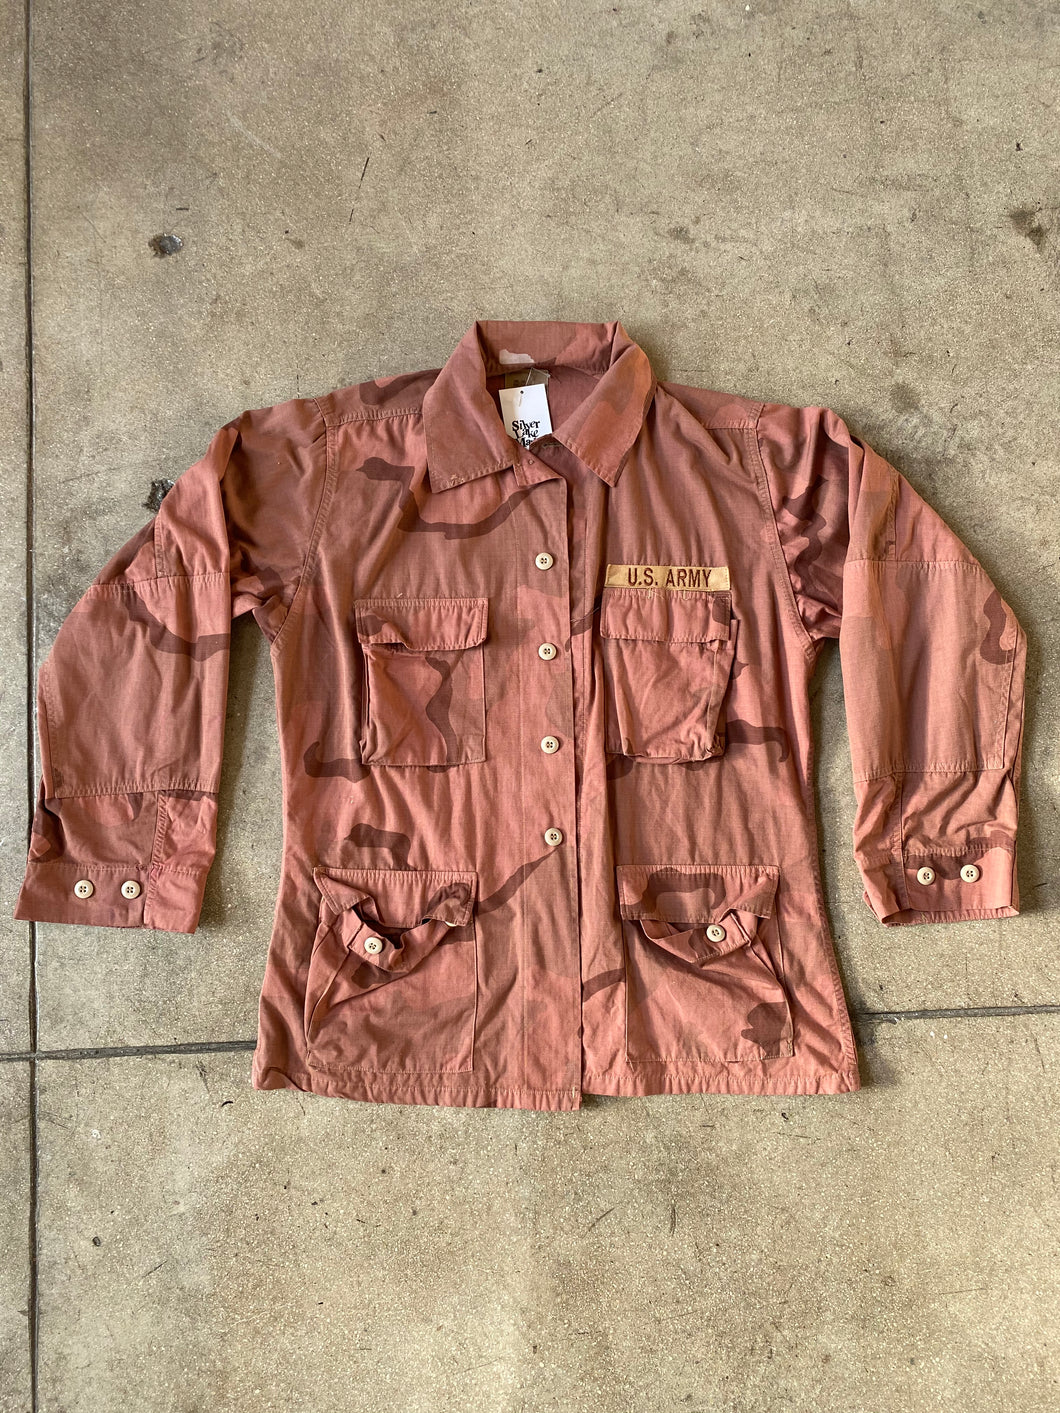 Overdyed Vintage Army Jacket - Silverlake,  - Vinatge, Silverlake Market - Designer